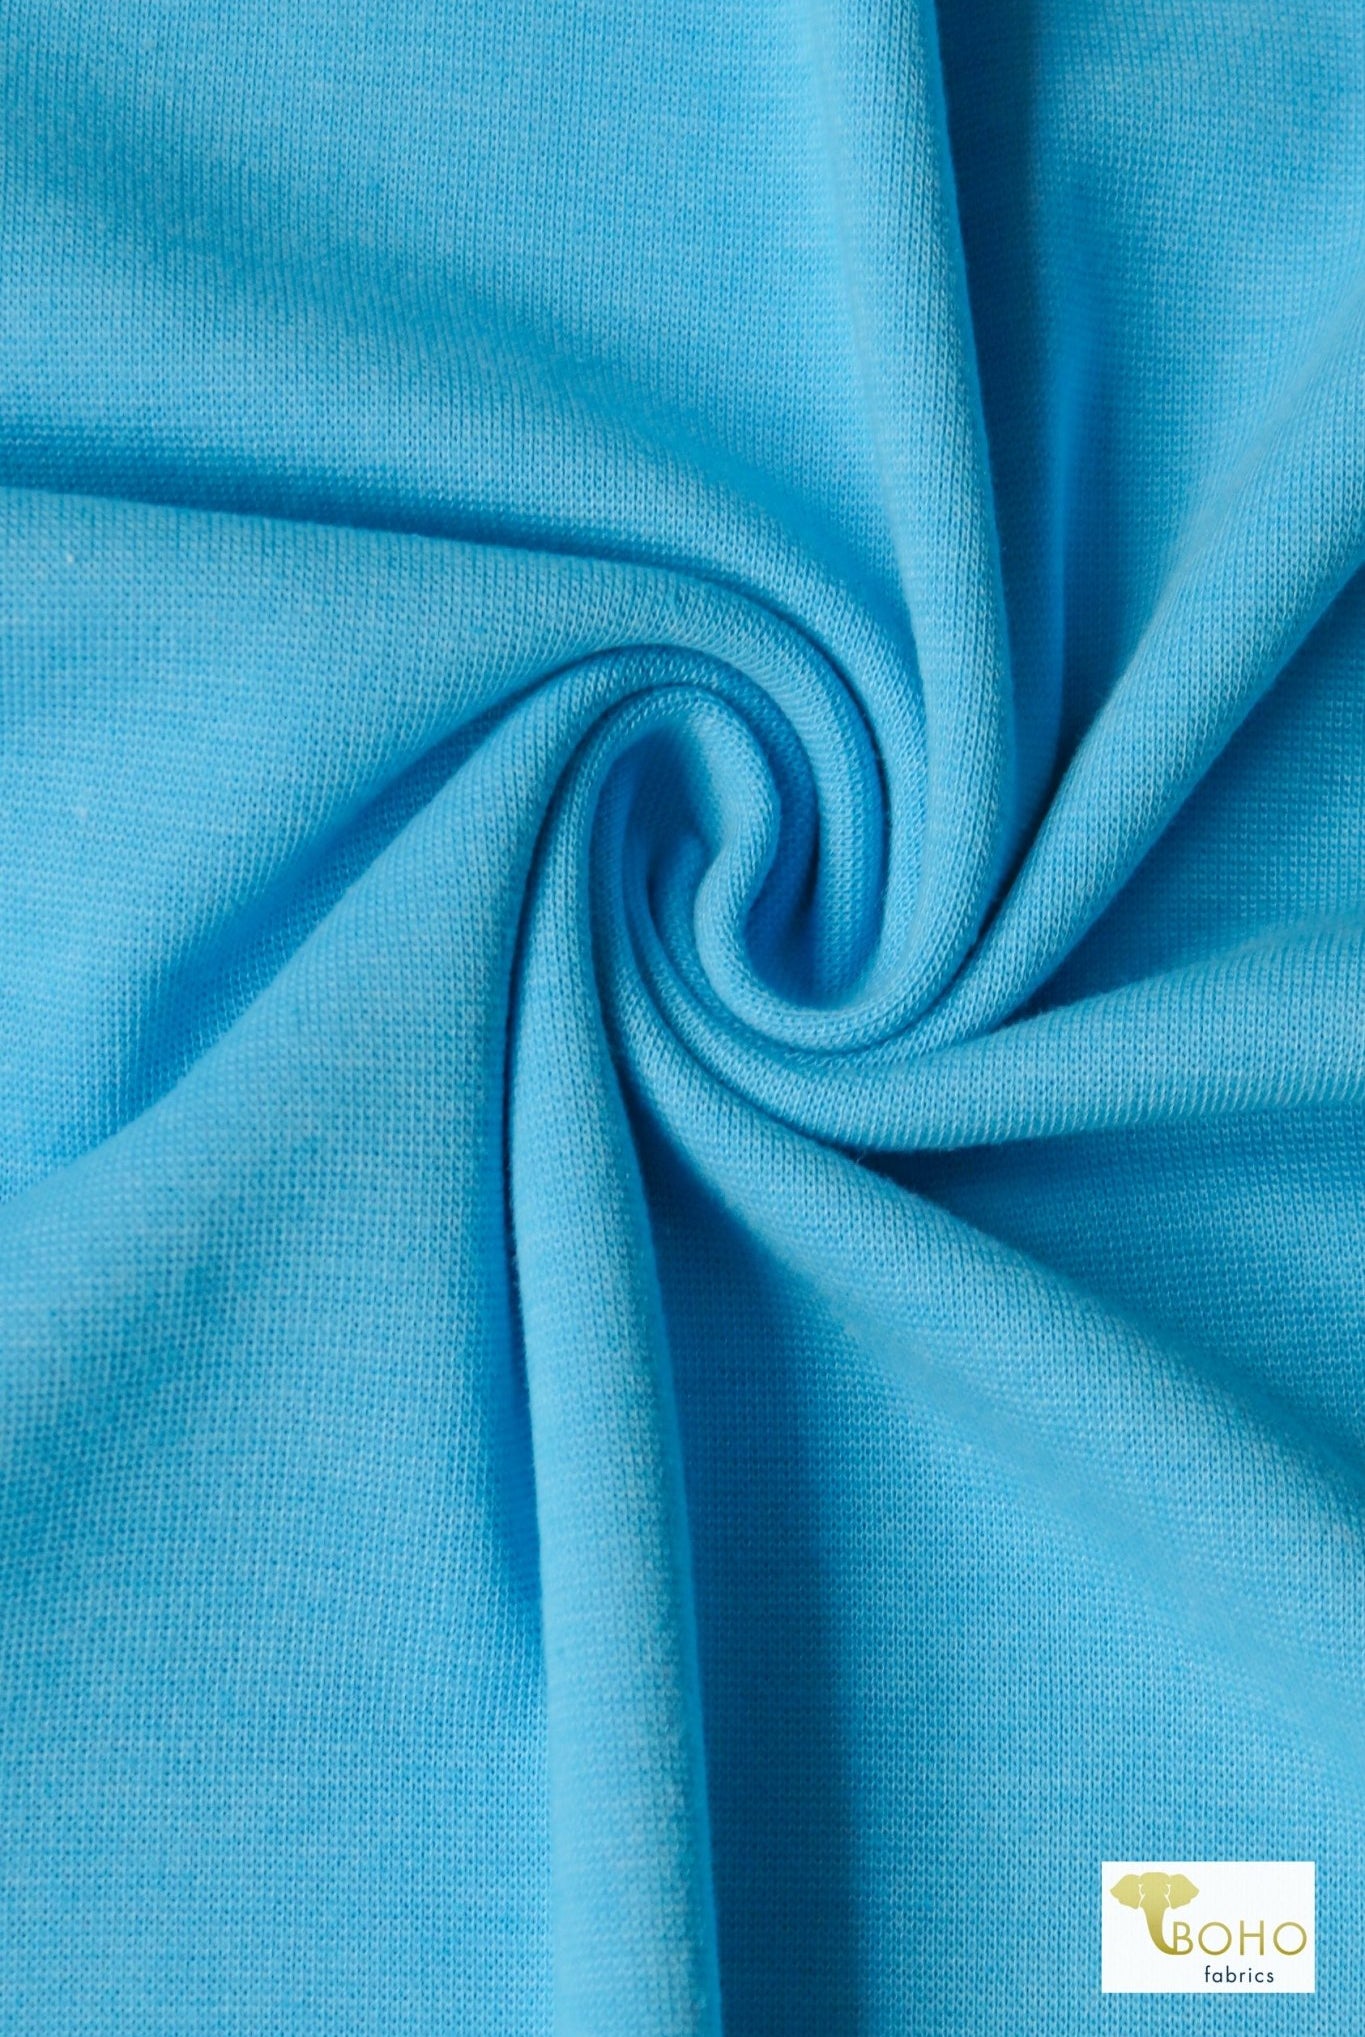 1x1 Rib Knit, Blue Sky. Sold by the Half Yard. - Boho Fabrics